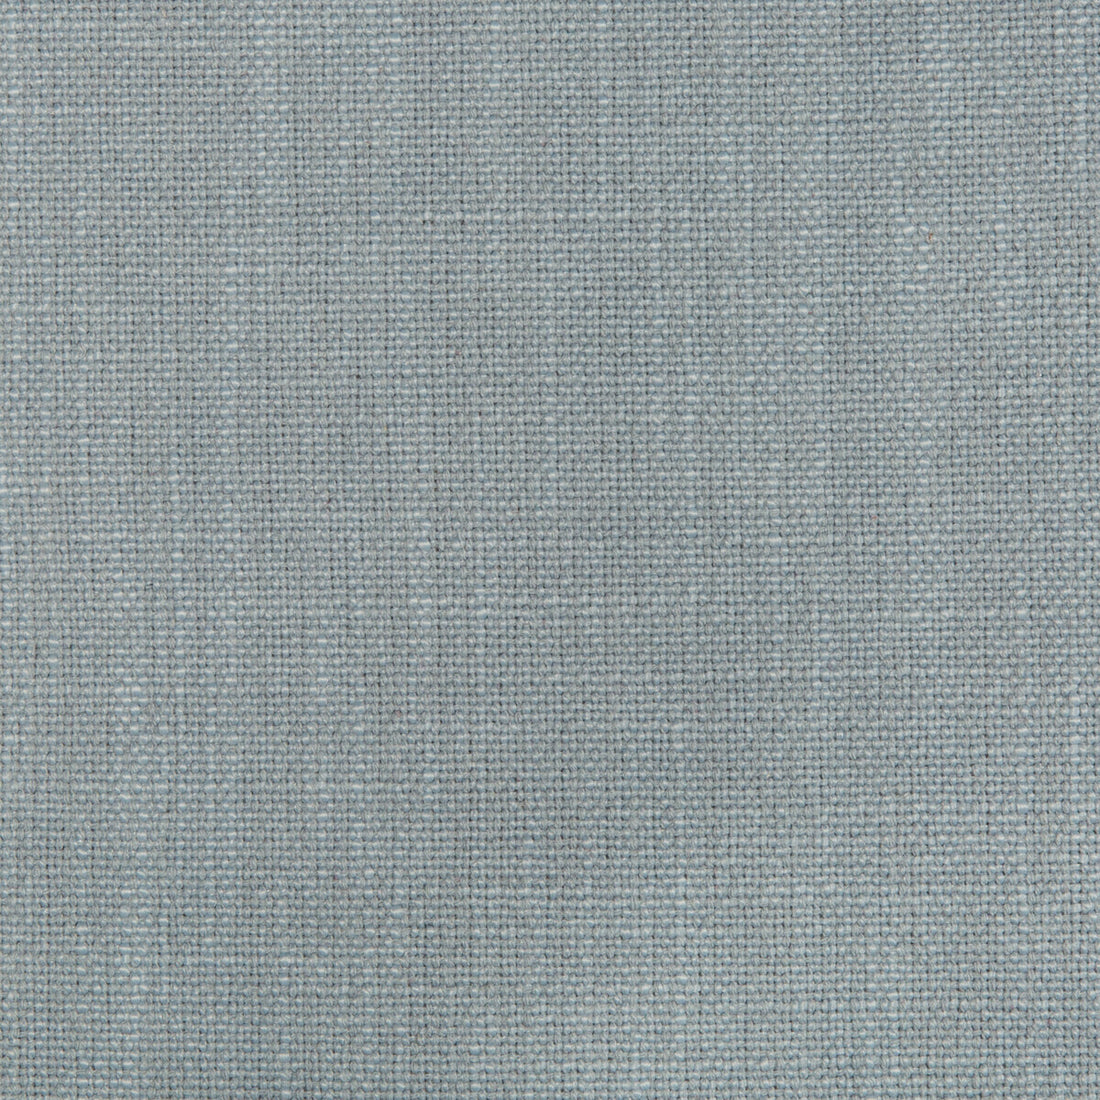 Kravet Smart fabric in 35226-15 color - pattern 35226.15.0 - by Kravet Smart in the Performance Kravetarmor collection